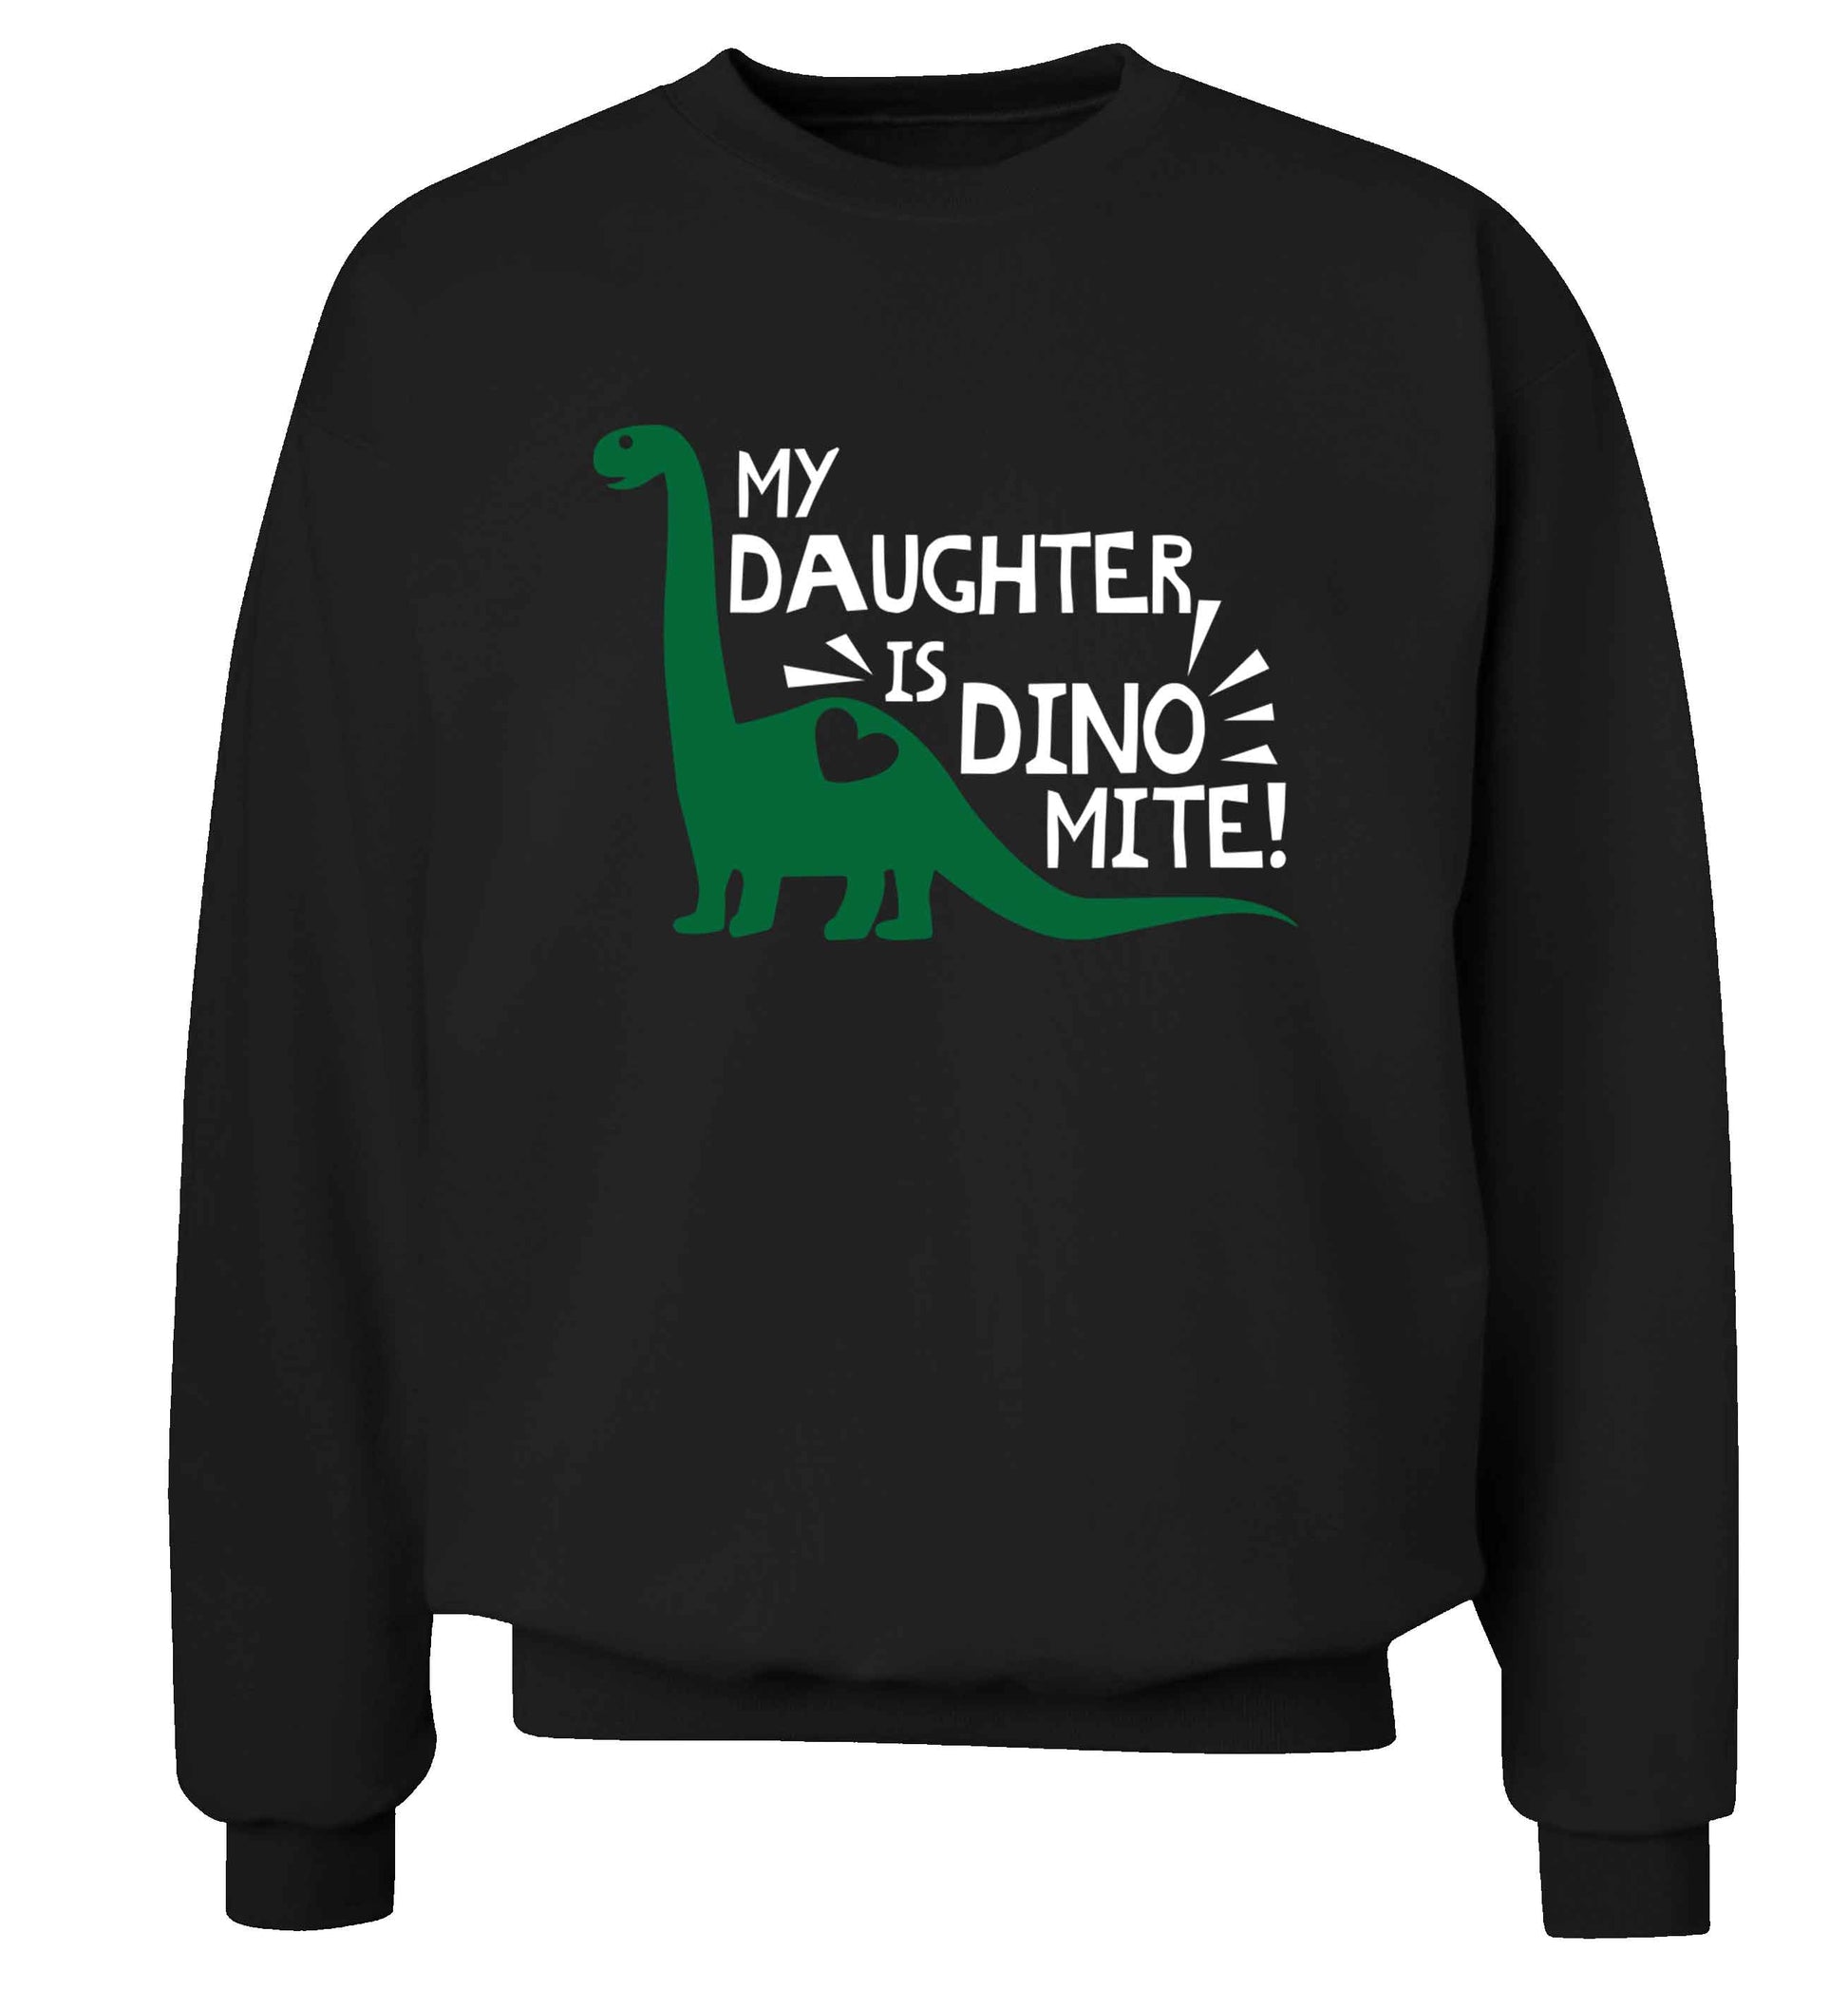 My daughter is dinomite! Adult's unisex black Sweater 2XL